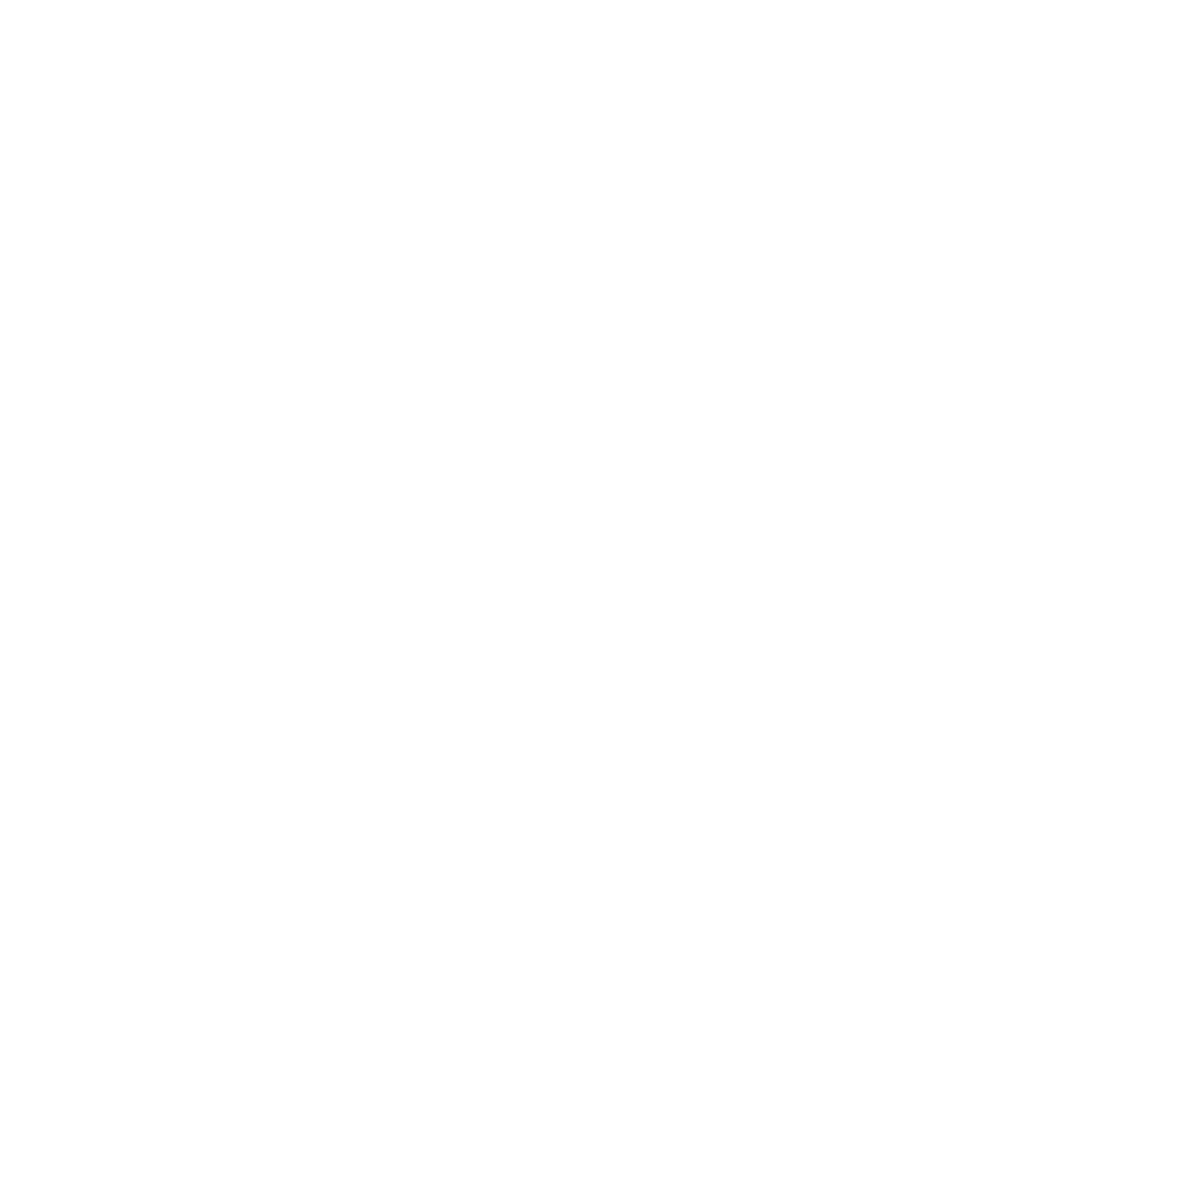 sending email